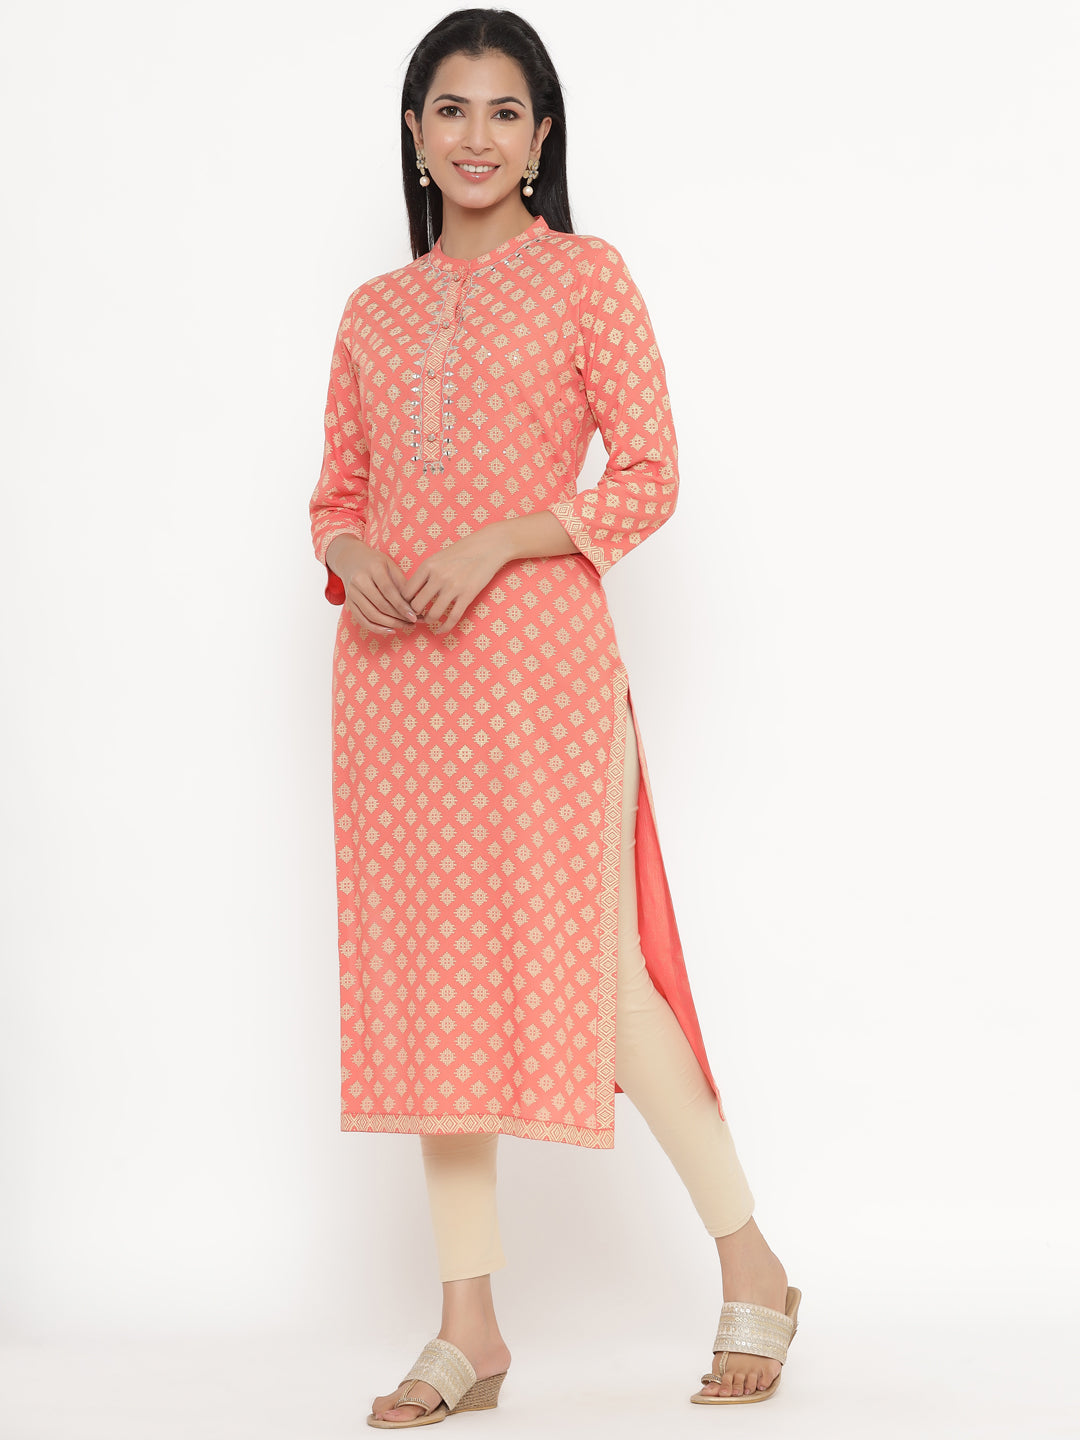 Women's Self Desgin Rayon Fabric Straight Kurta Peach Color - Kipek